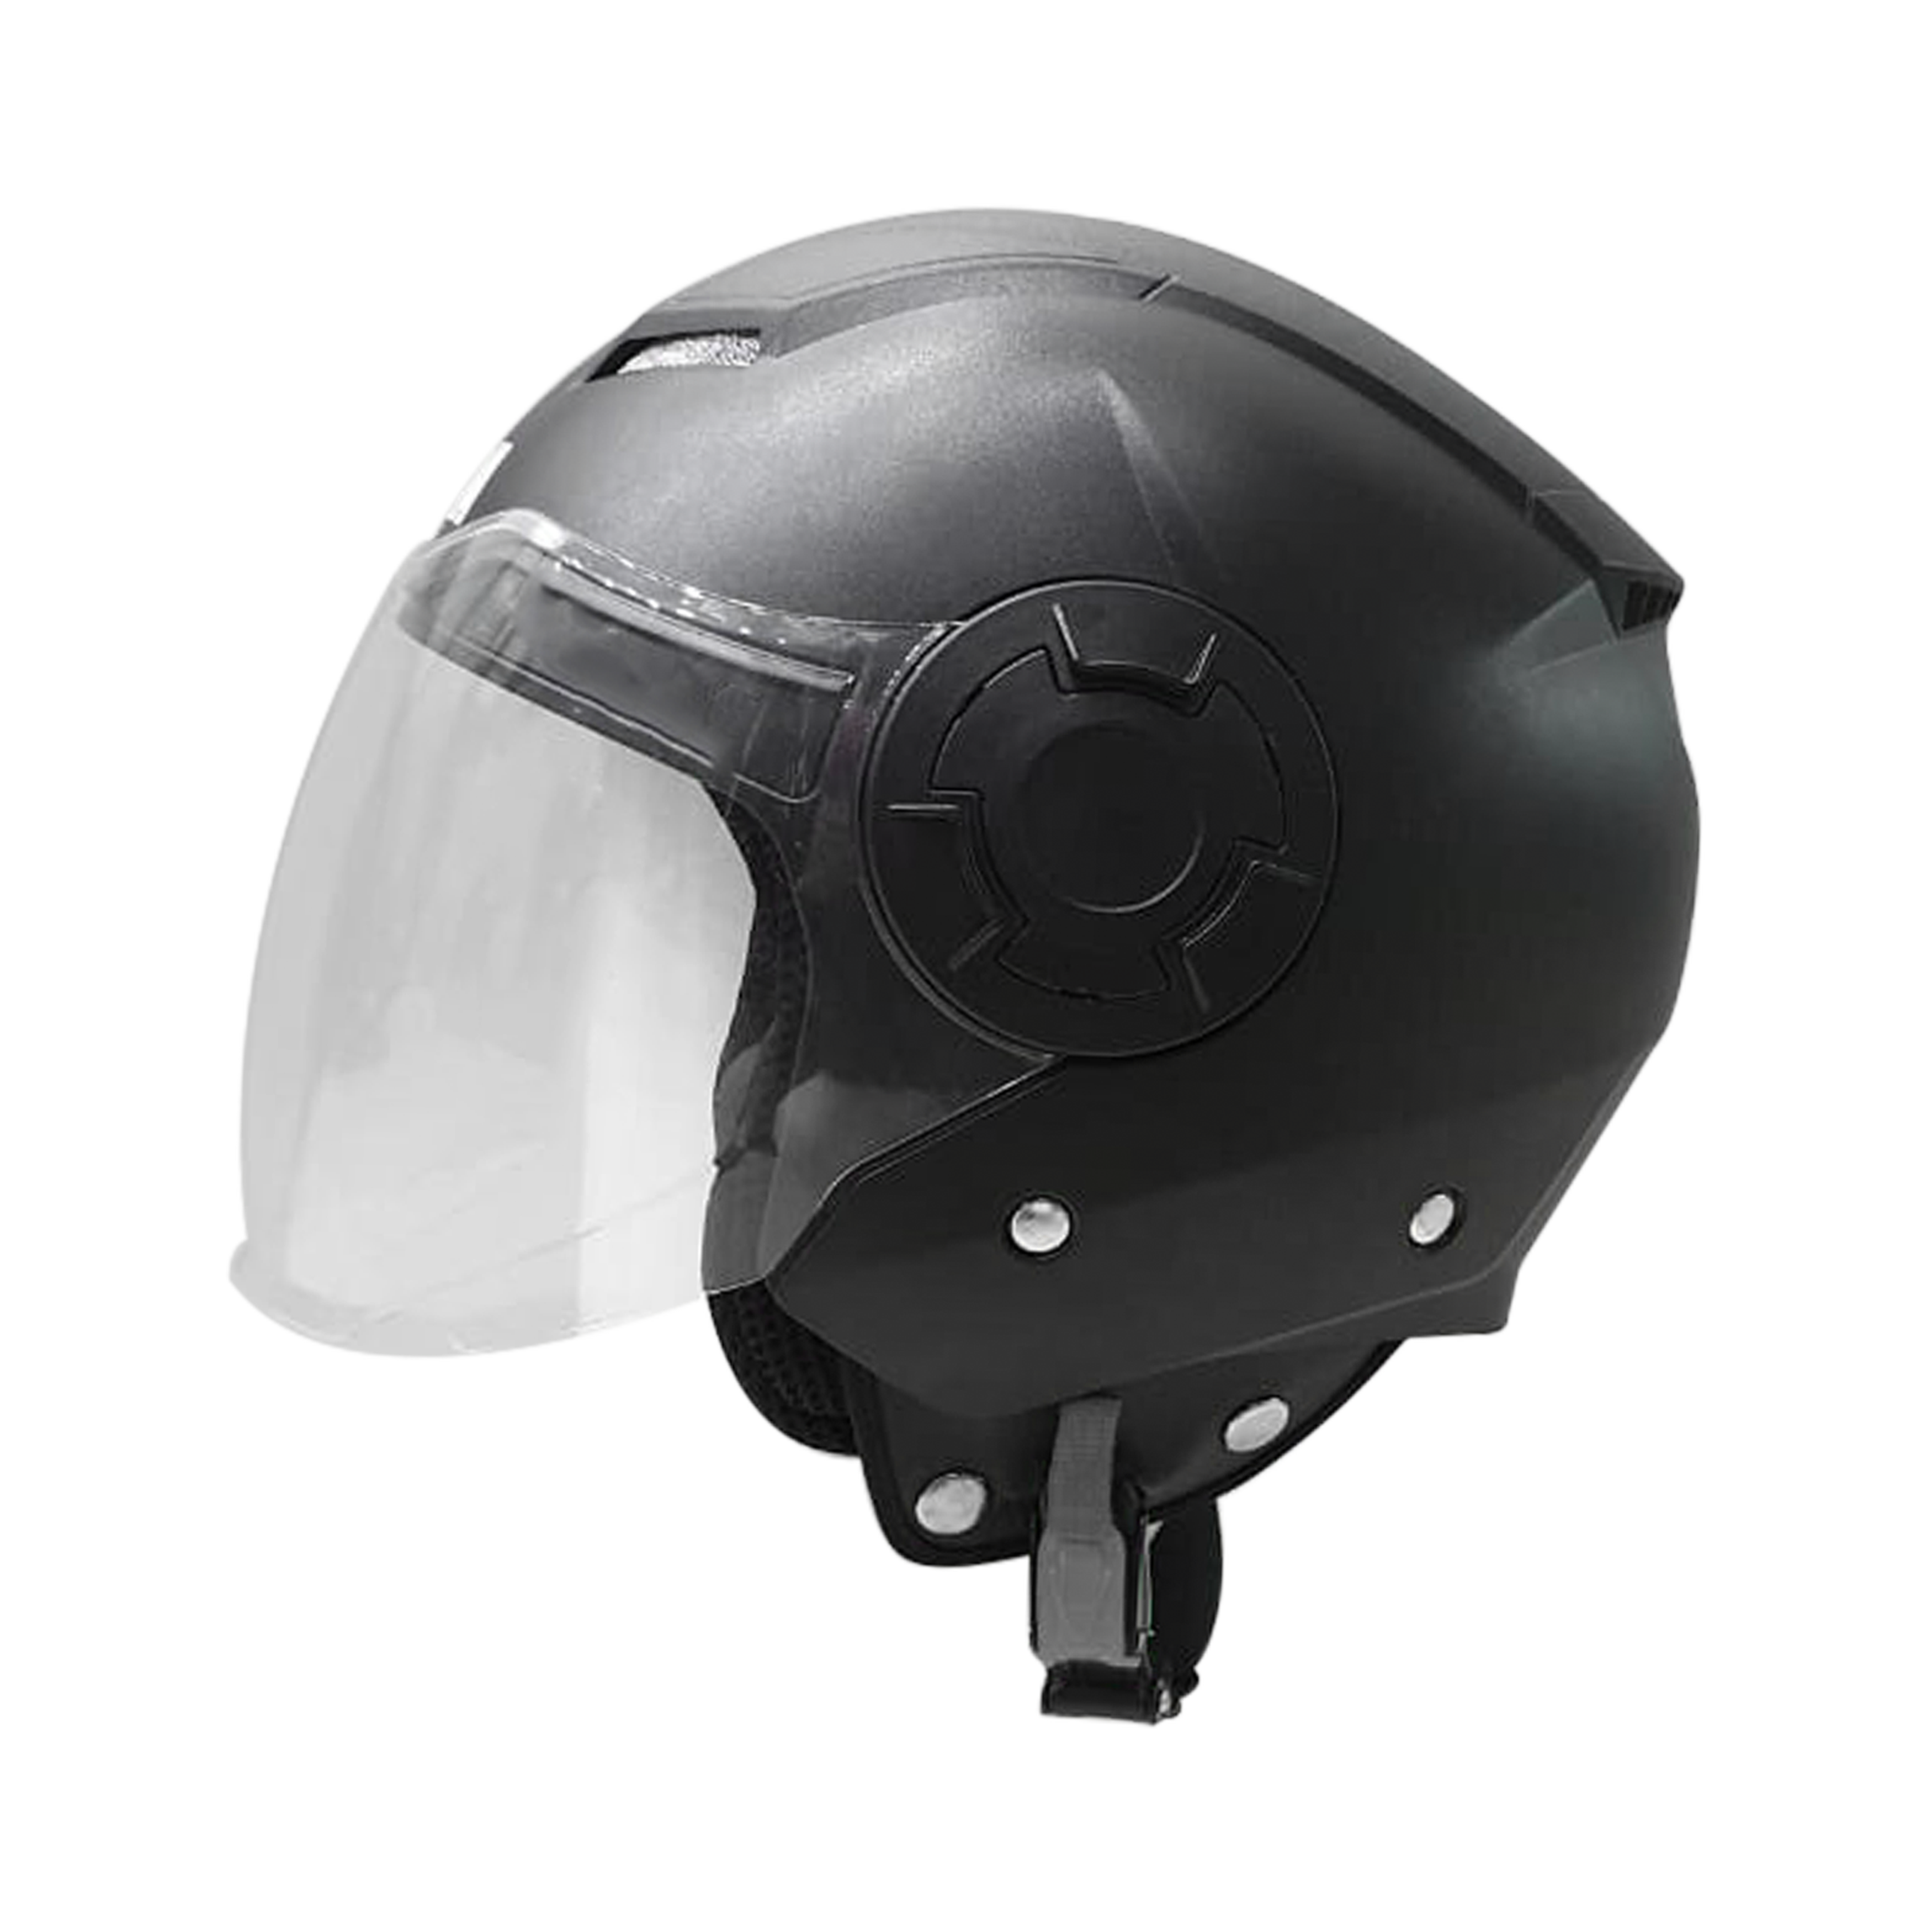 Steelbird Baron Open Face Helmet , ISI Certified Helmet (Dashing Black With Clear Visor)